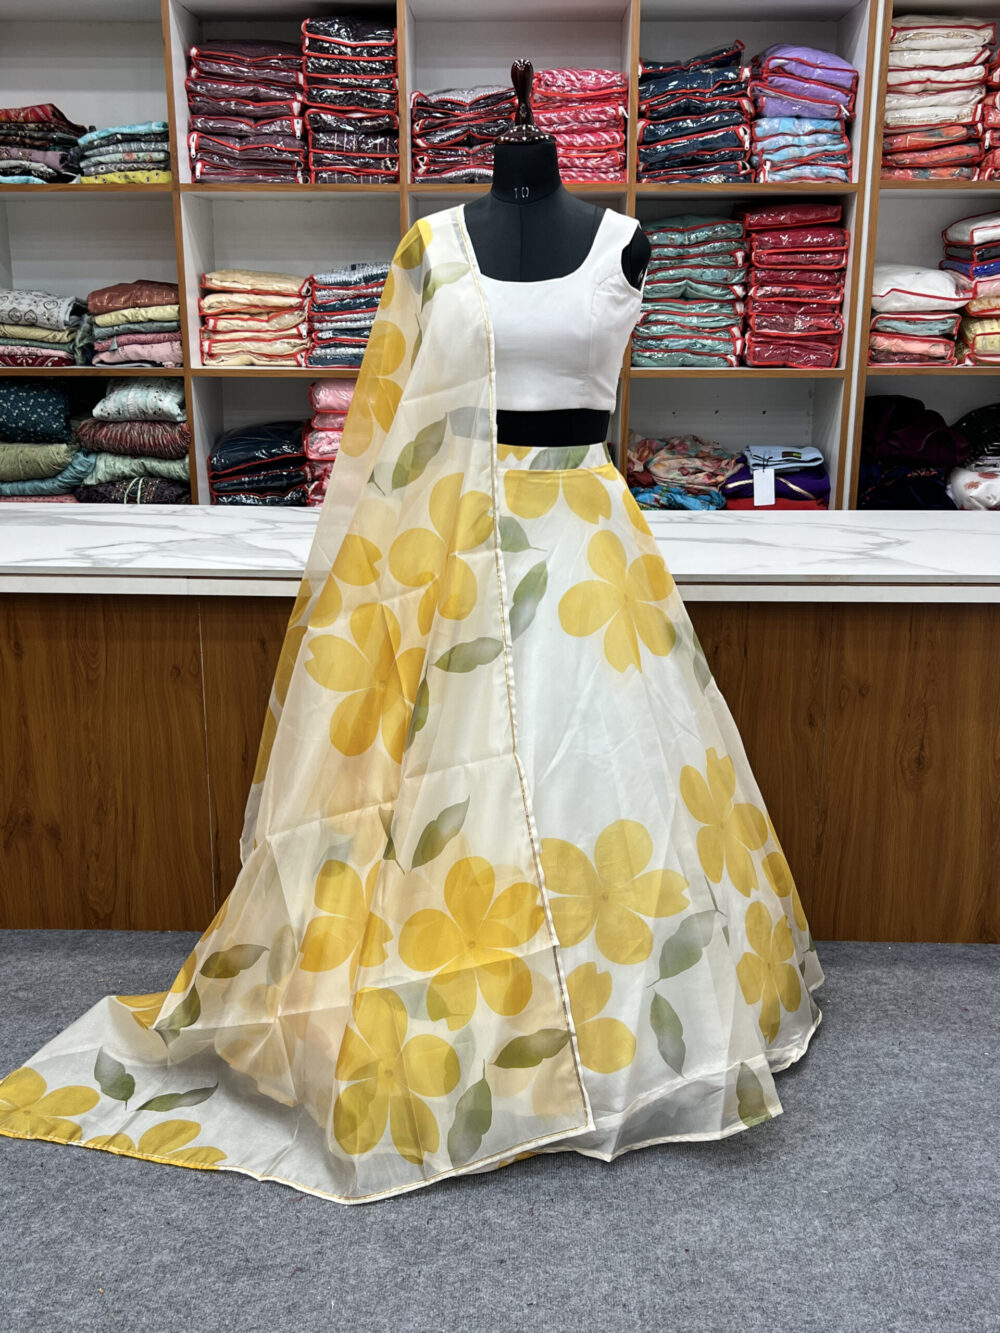 Bridal Lehenga Blouse Designs 2021 | Maharani Designer Boutique